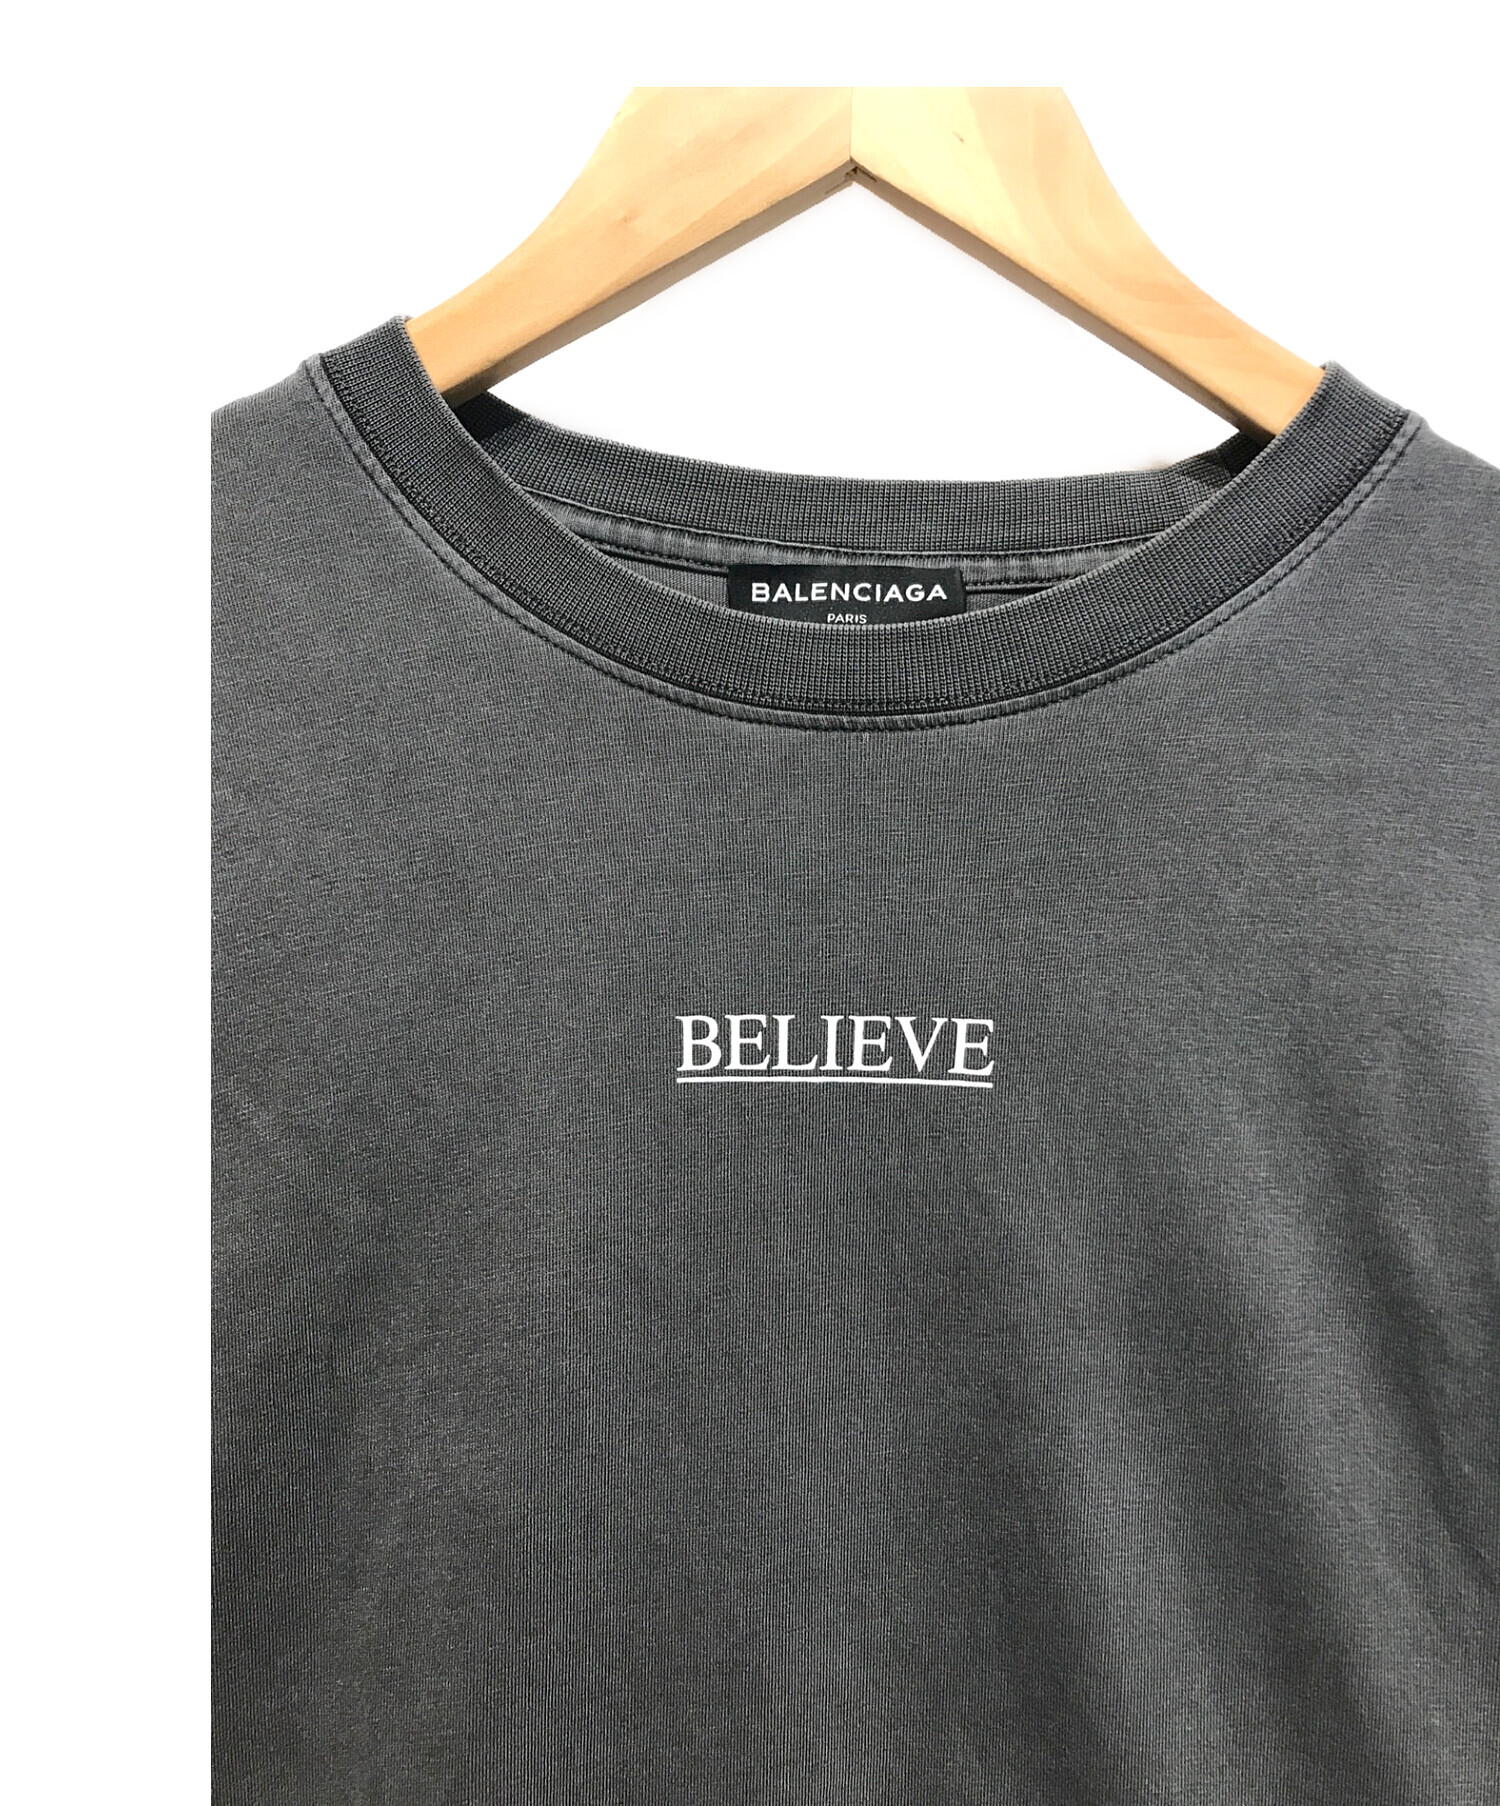 BALENCIAGA (バレンシアガ) BELIEVE Tシャツ グレー サイズ:S